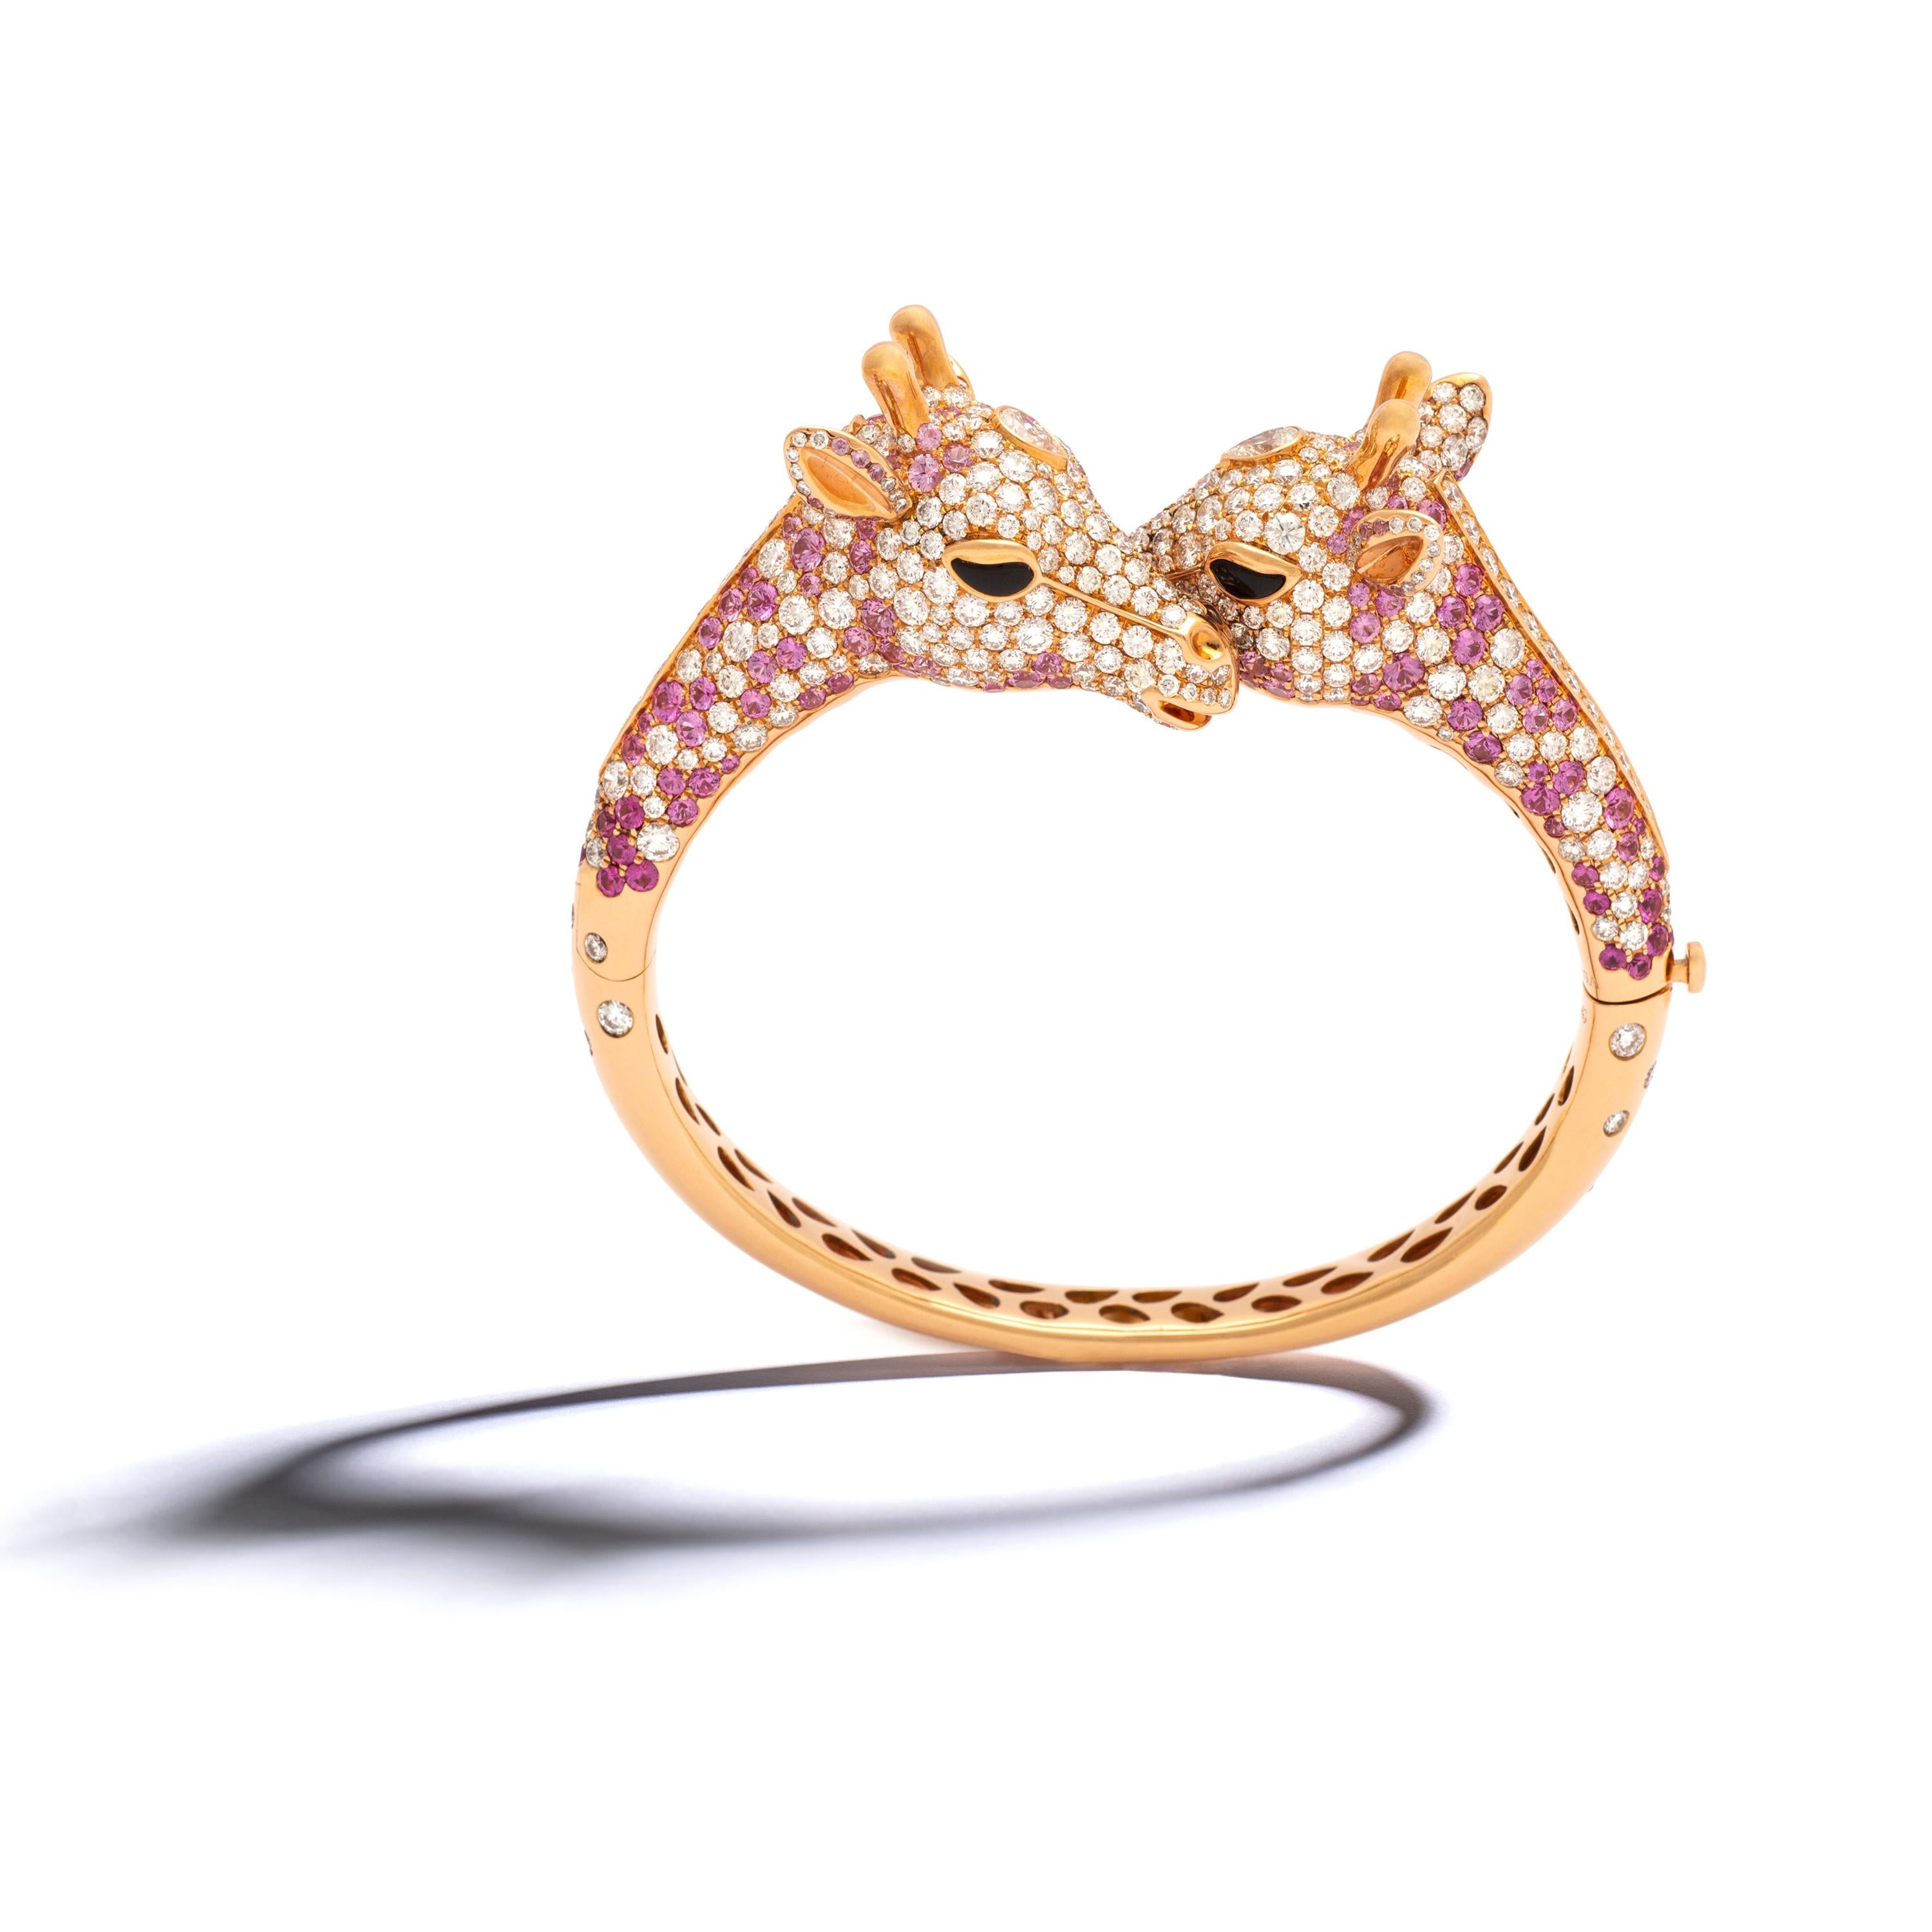 Bracelet giraffe red gold 555 diamonds 16.80 carats 217 pink sapphires 8.20 carats 2 black diamonds 0.49 carats 4 onyx 0.43 carat.